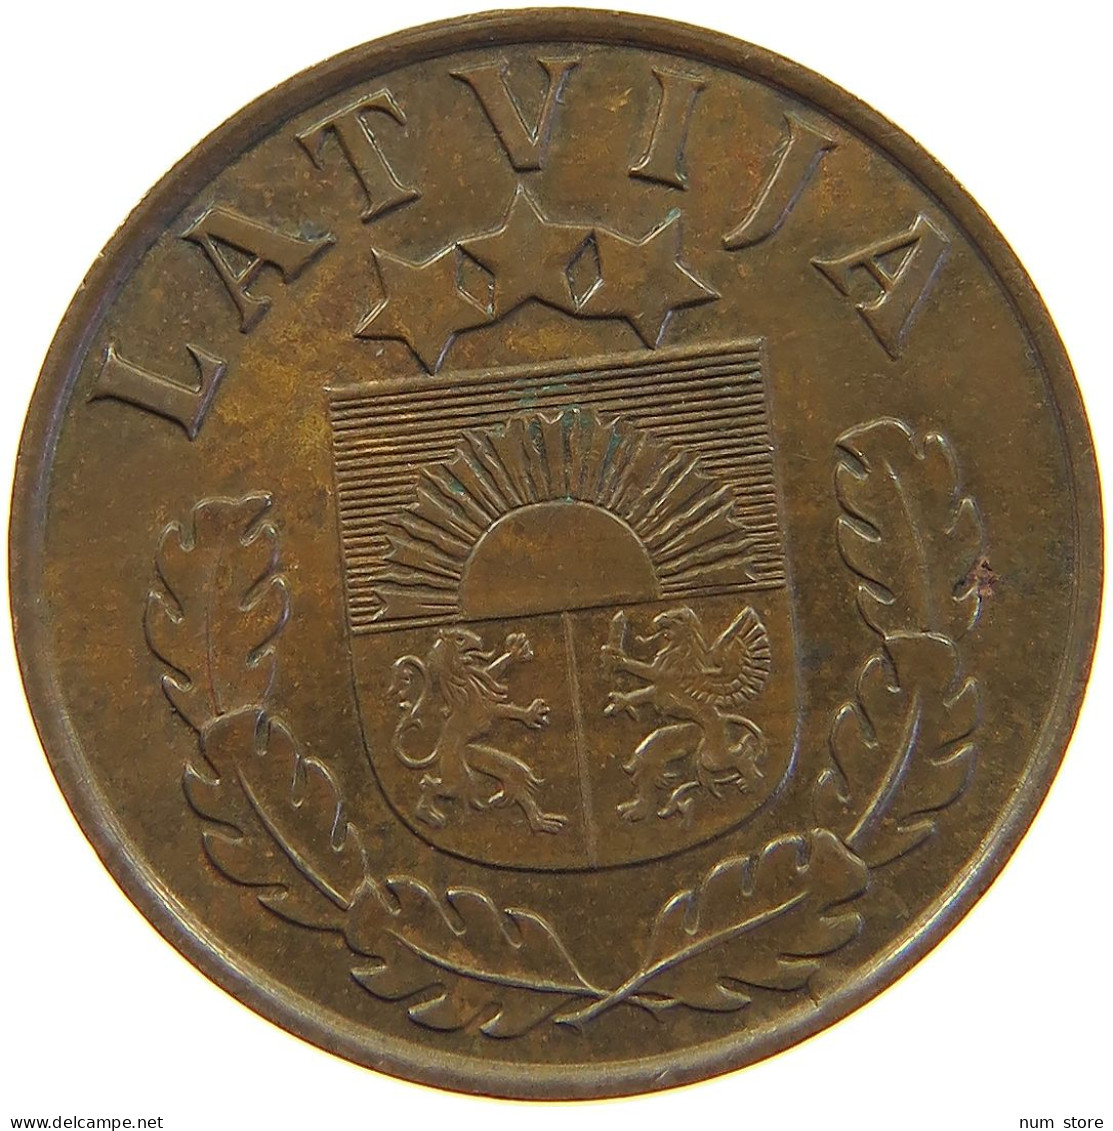 LATVIA 2 SANTIMI 1939  #a054 0489 - Latvia